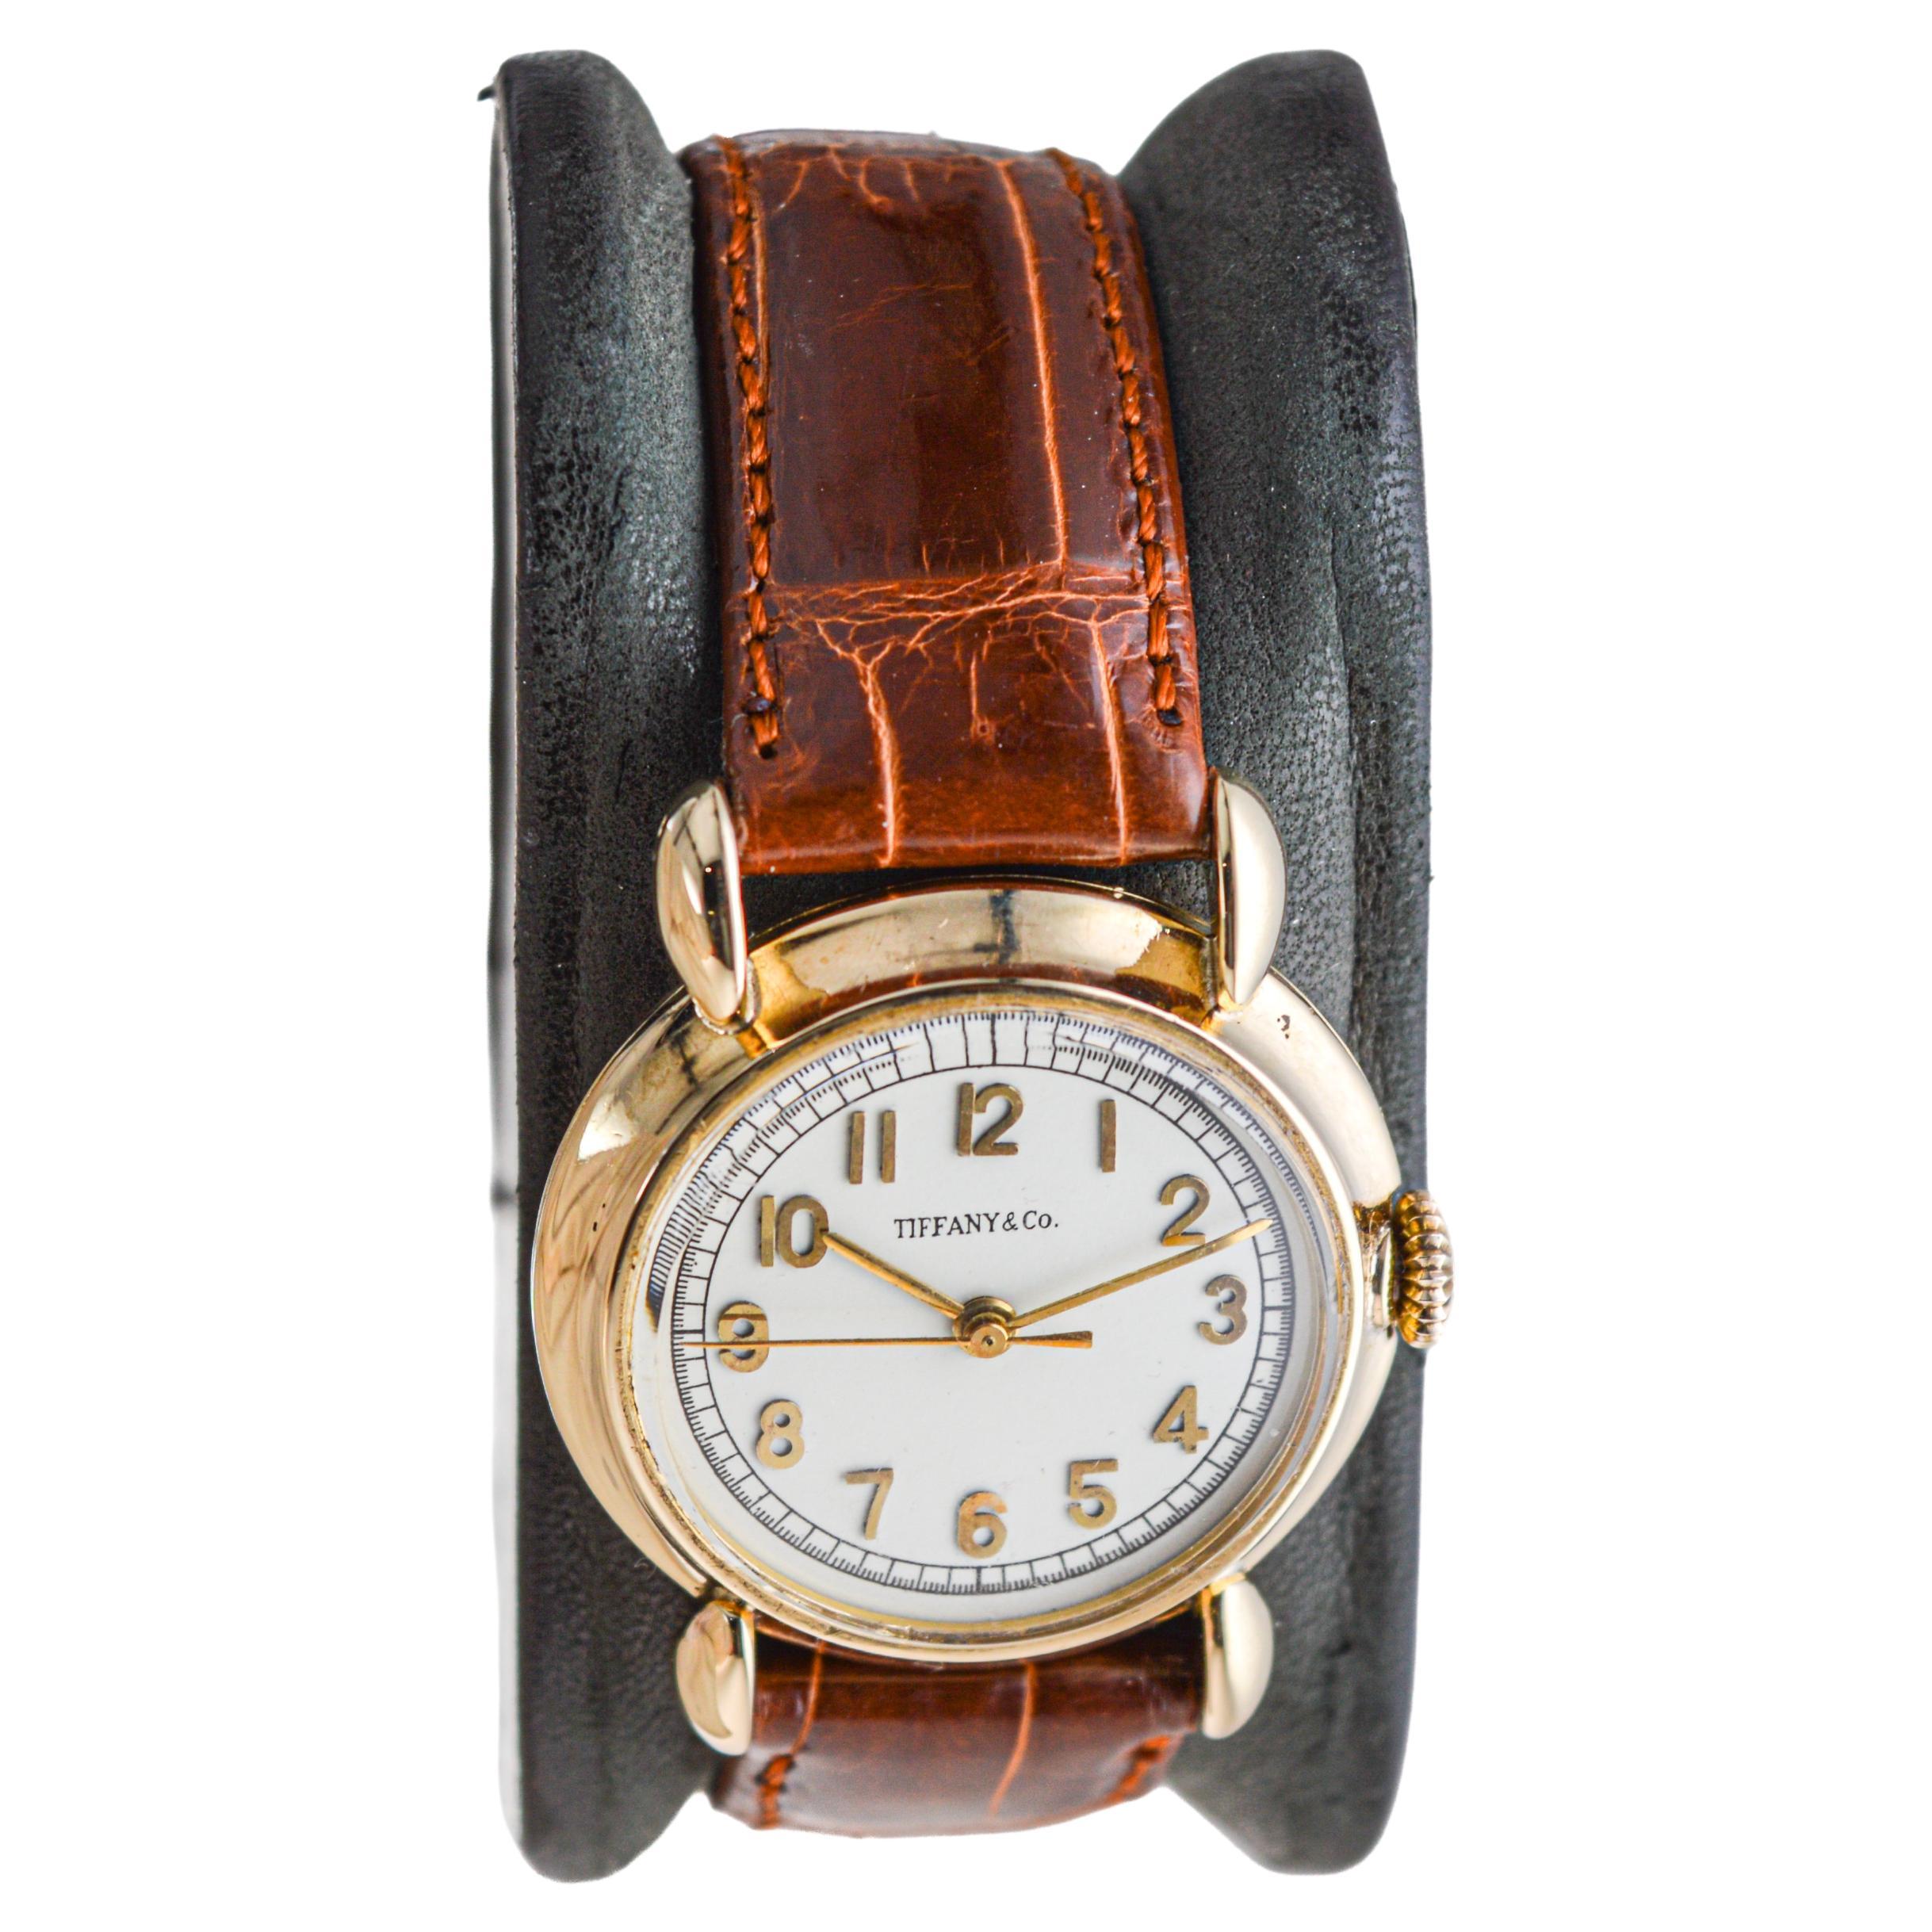 Tiffany & Co. by Schaffhausen International Watch Company Art Deco Style Watch For Sale 3